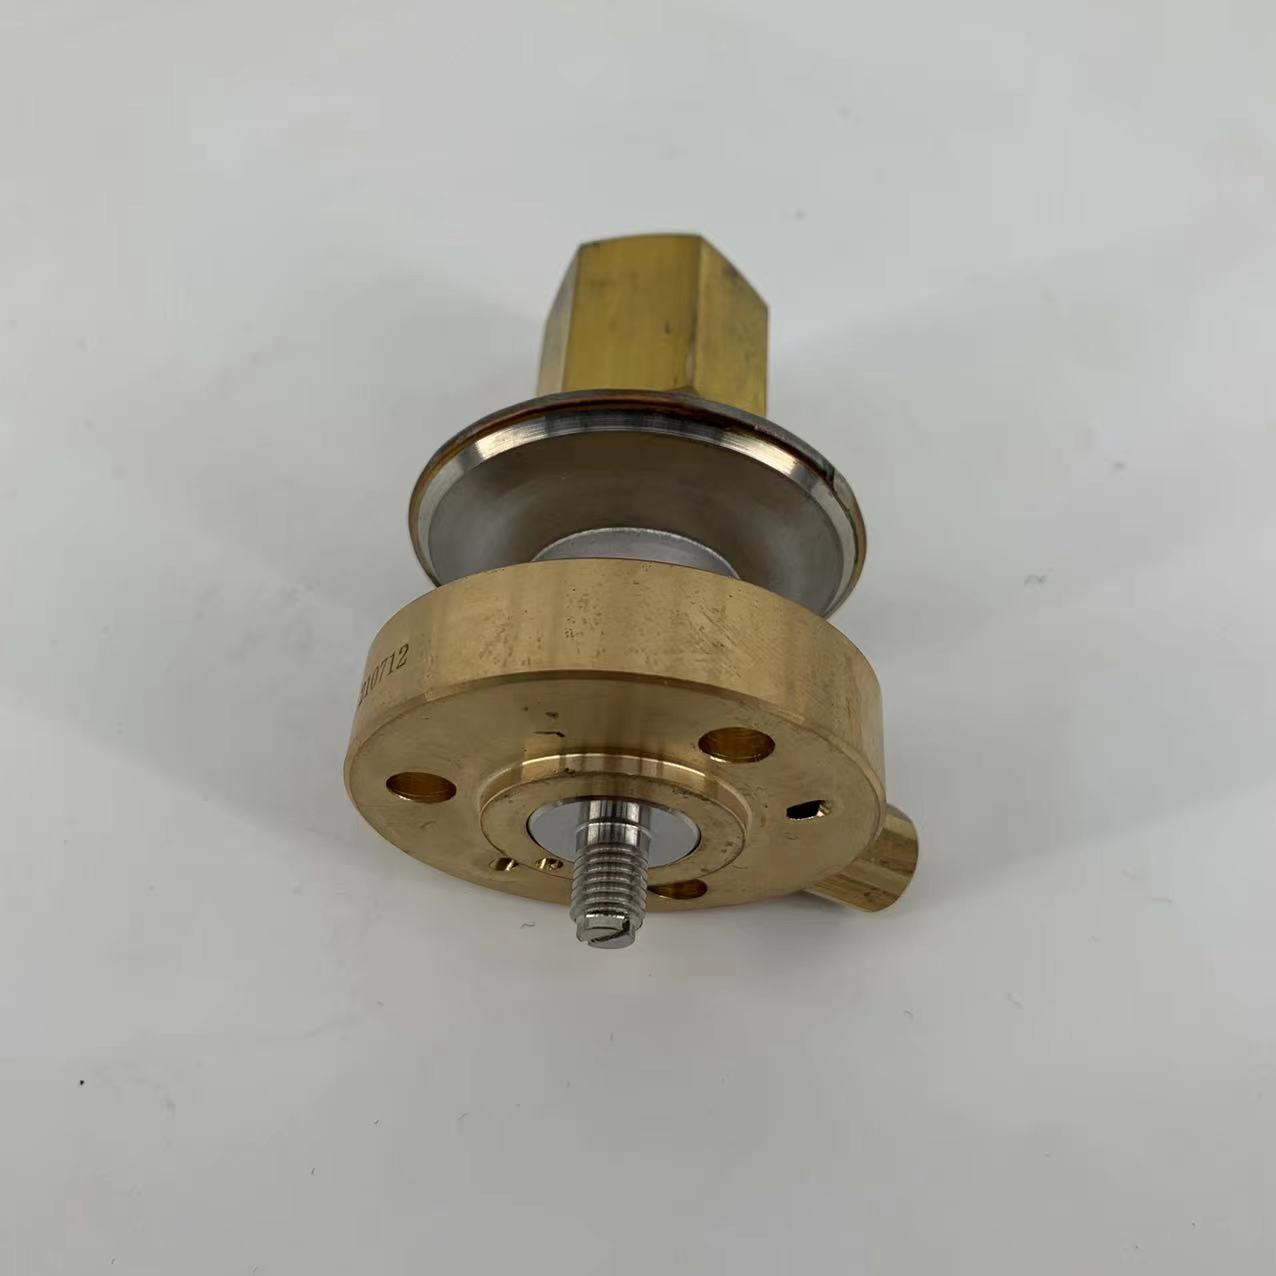 Unload valve (1)